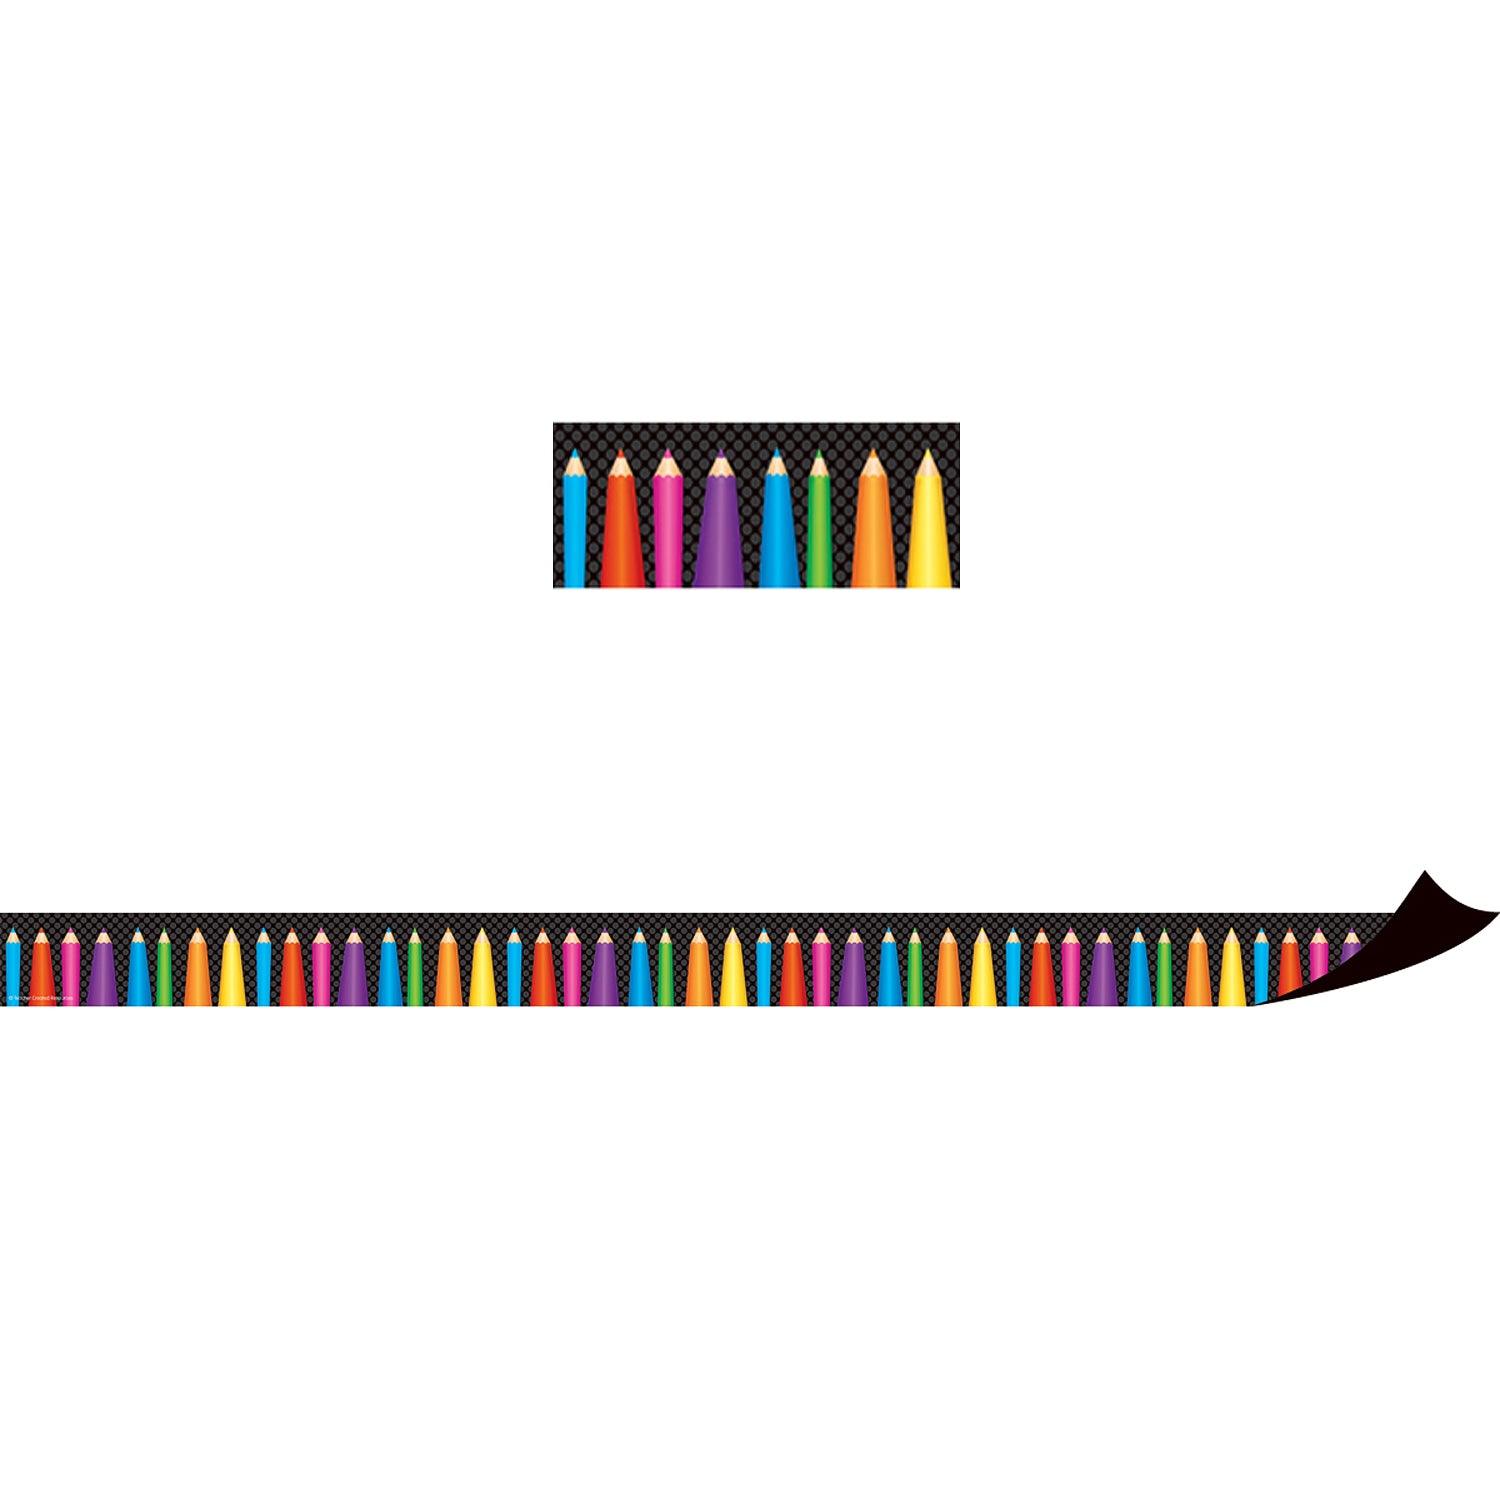 Magnetic Borders, Colored Pencils, 24 Feet Per Pack, 3 Packs - Loomini